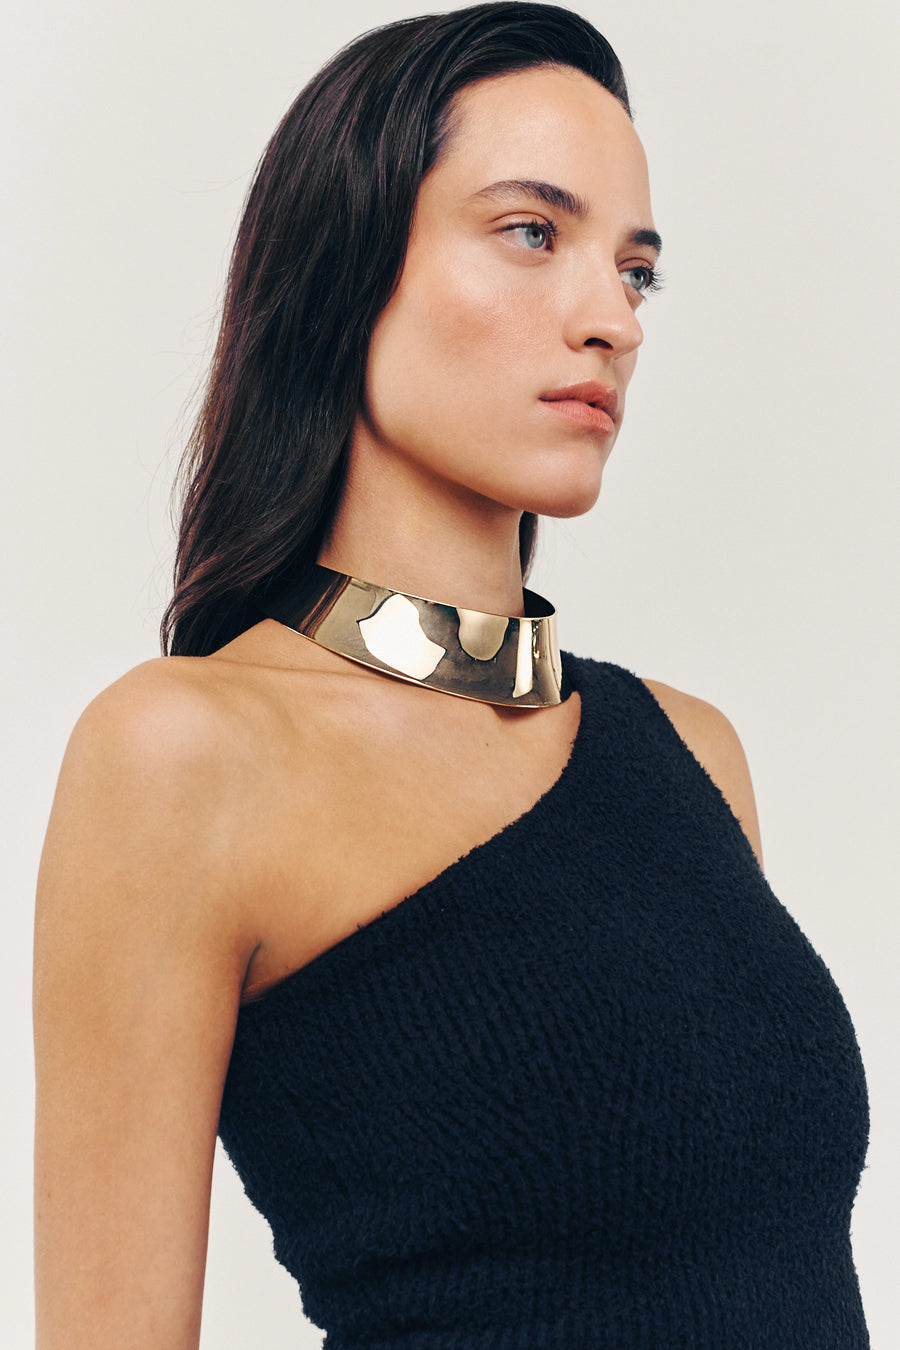 DIVA Choker. Wide plate collar choker in high gloss finish, 18K gold vermeil, handmade, hypoallergenic, water-resistant